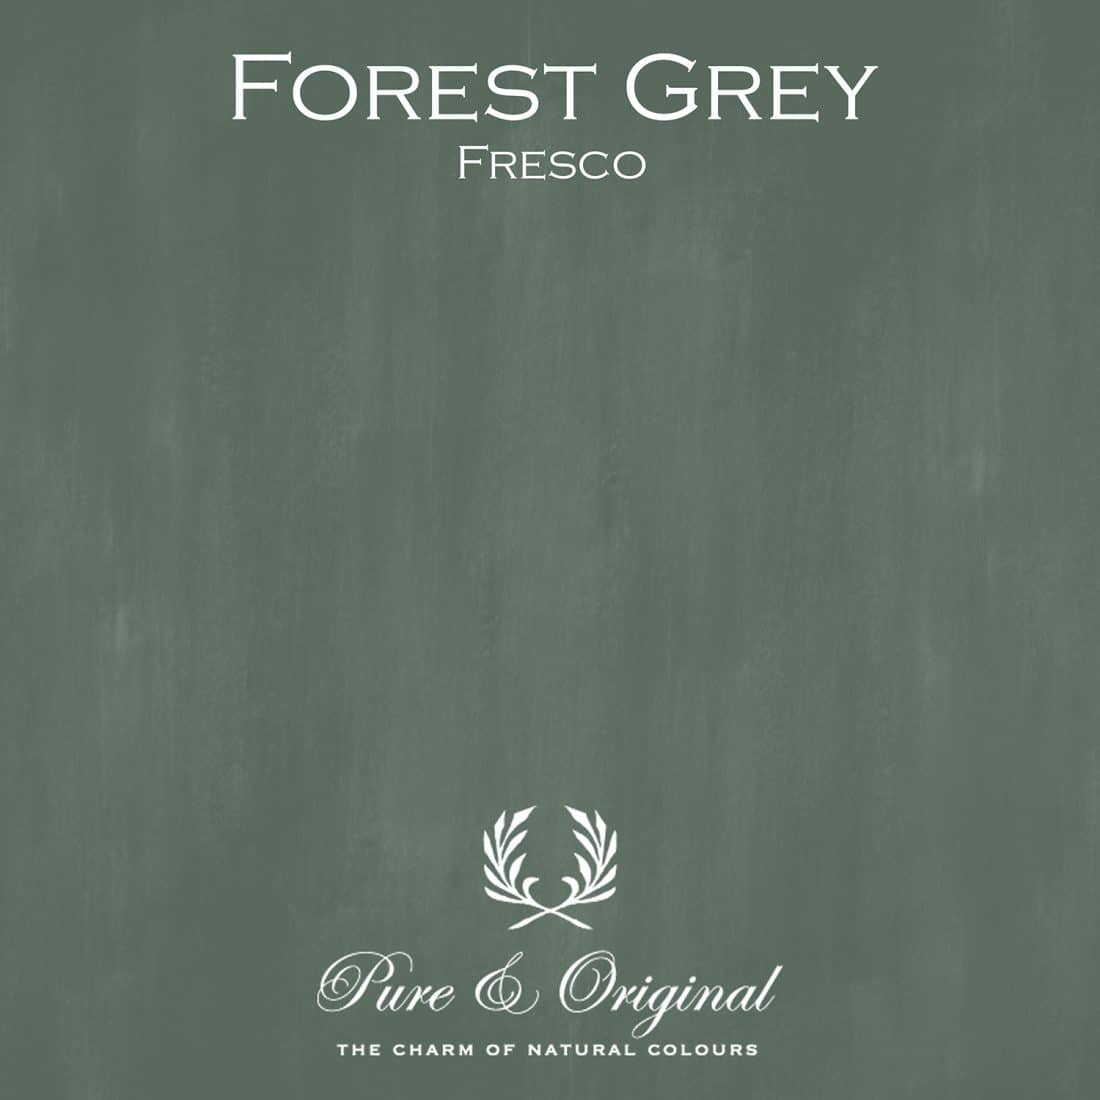 Forest Grey Fresco